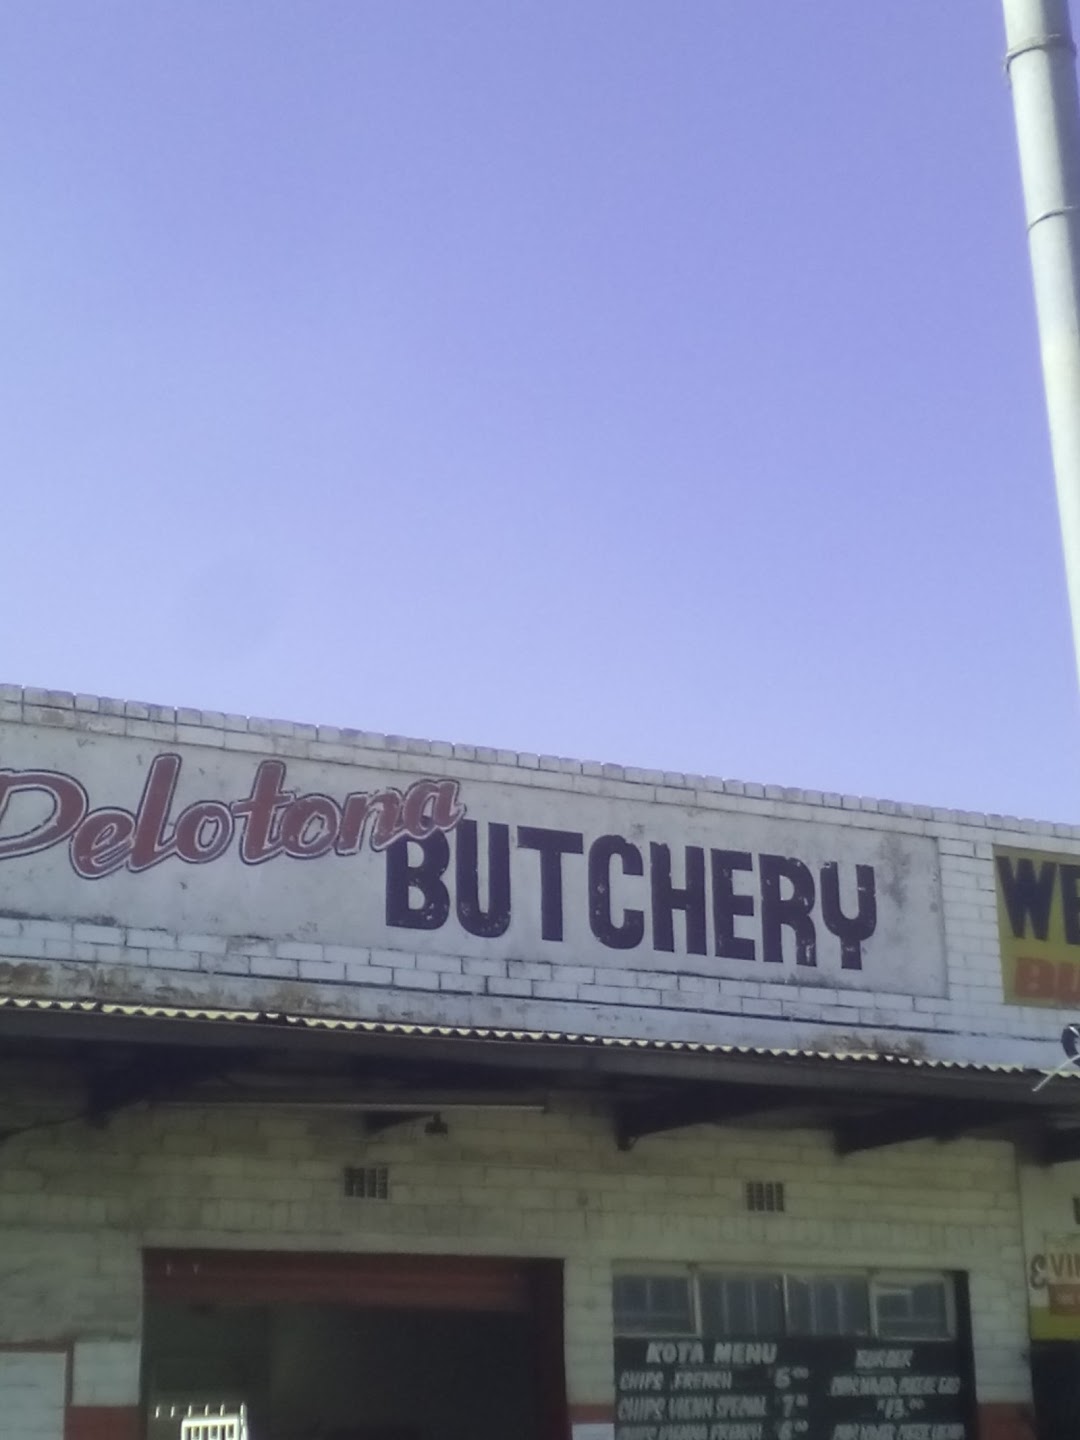 Pelotona Butchery